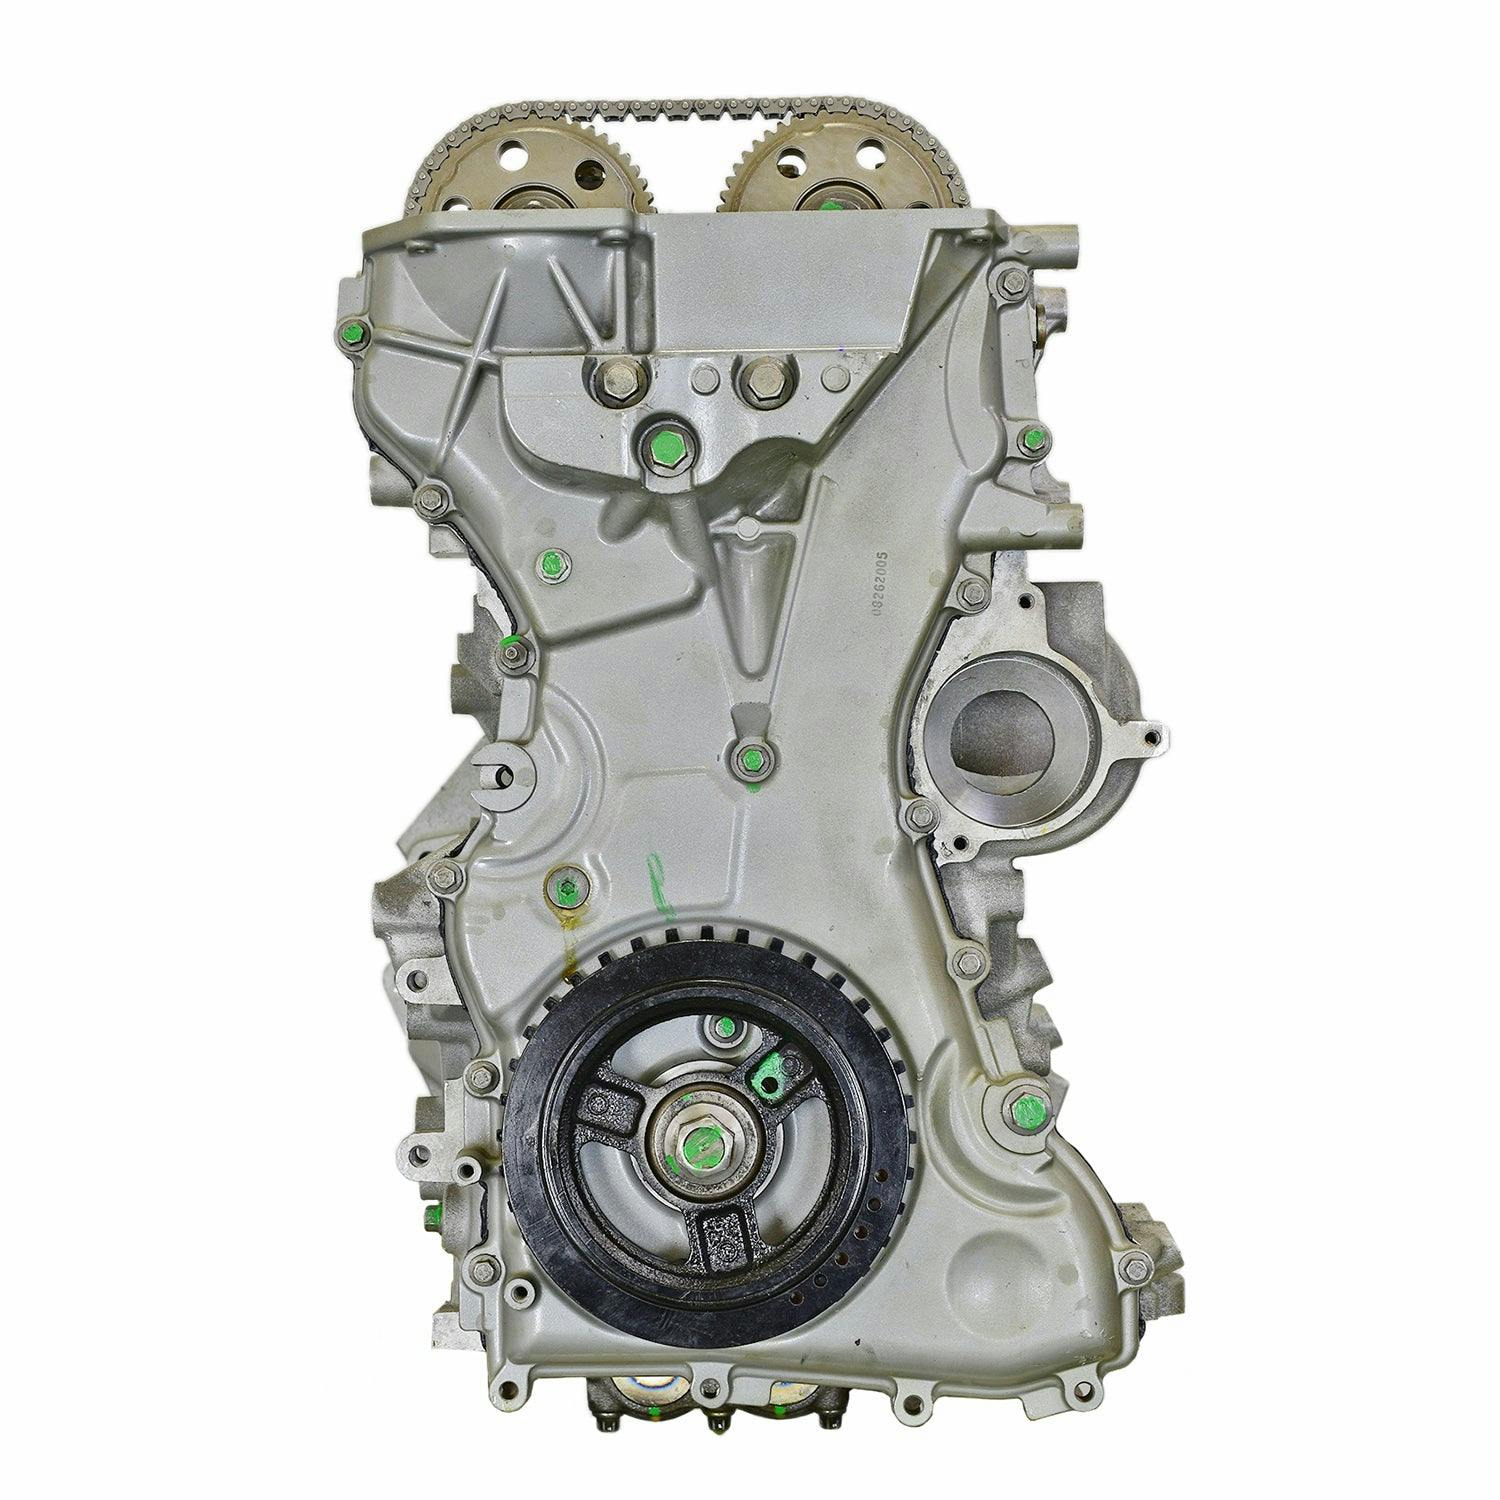 2.3L Inline-4 Engine for 2005-2008 Ford Escape/Mazda Tribute/Mercury Mariner